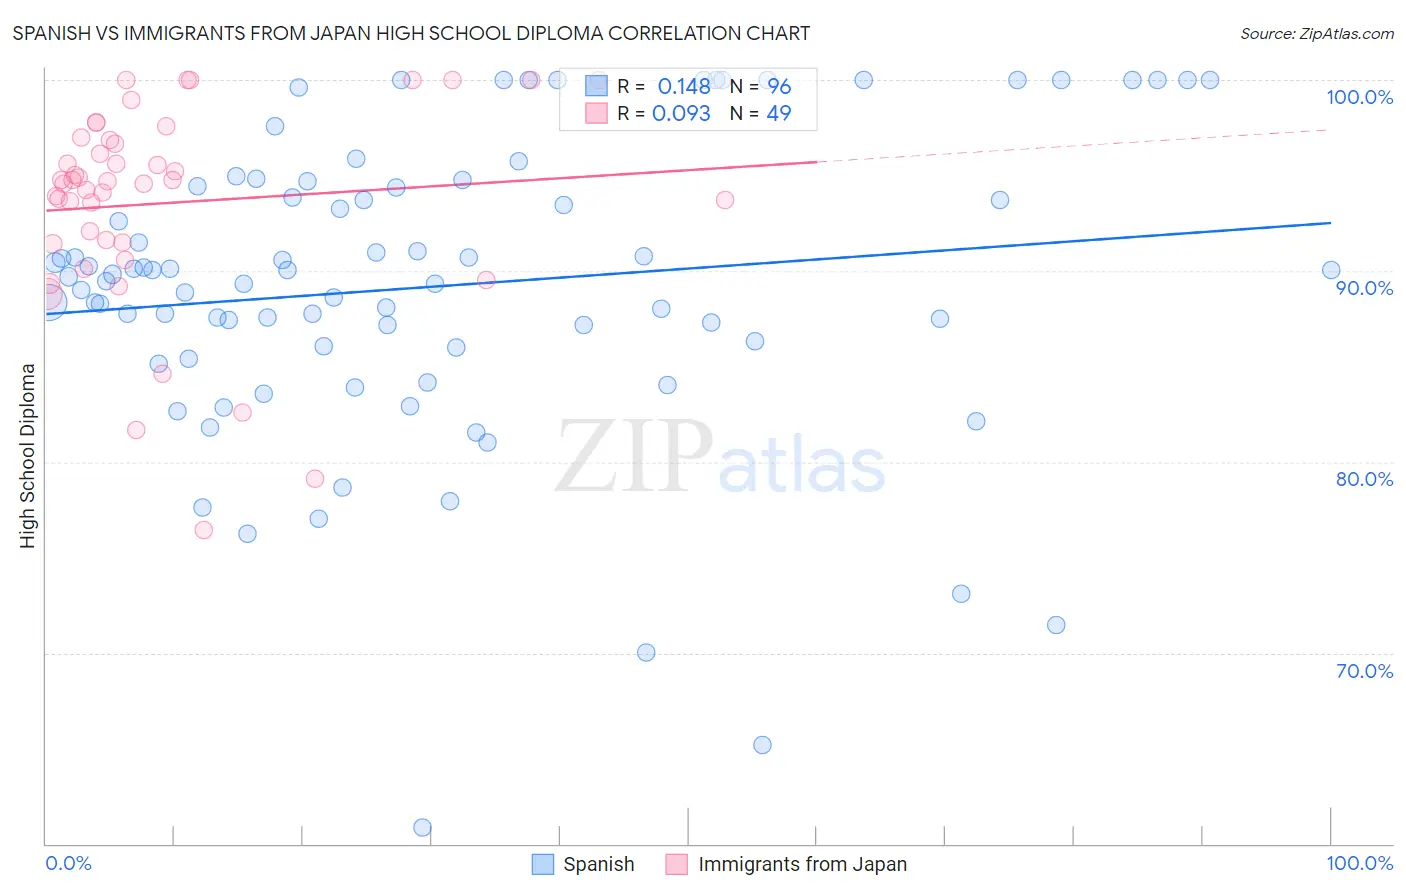 Spanish vs Immigrants from Japan High School Diploma